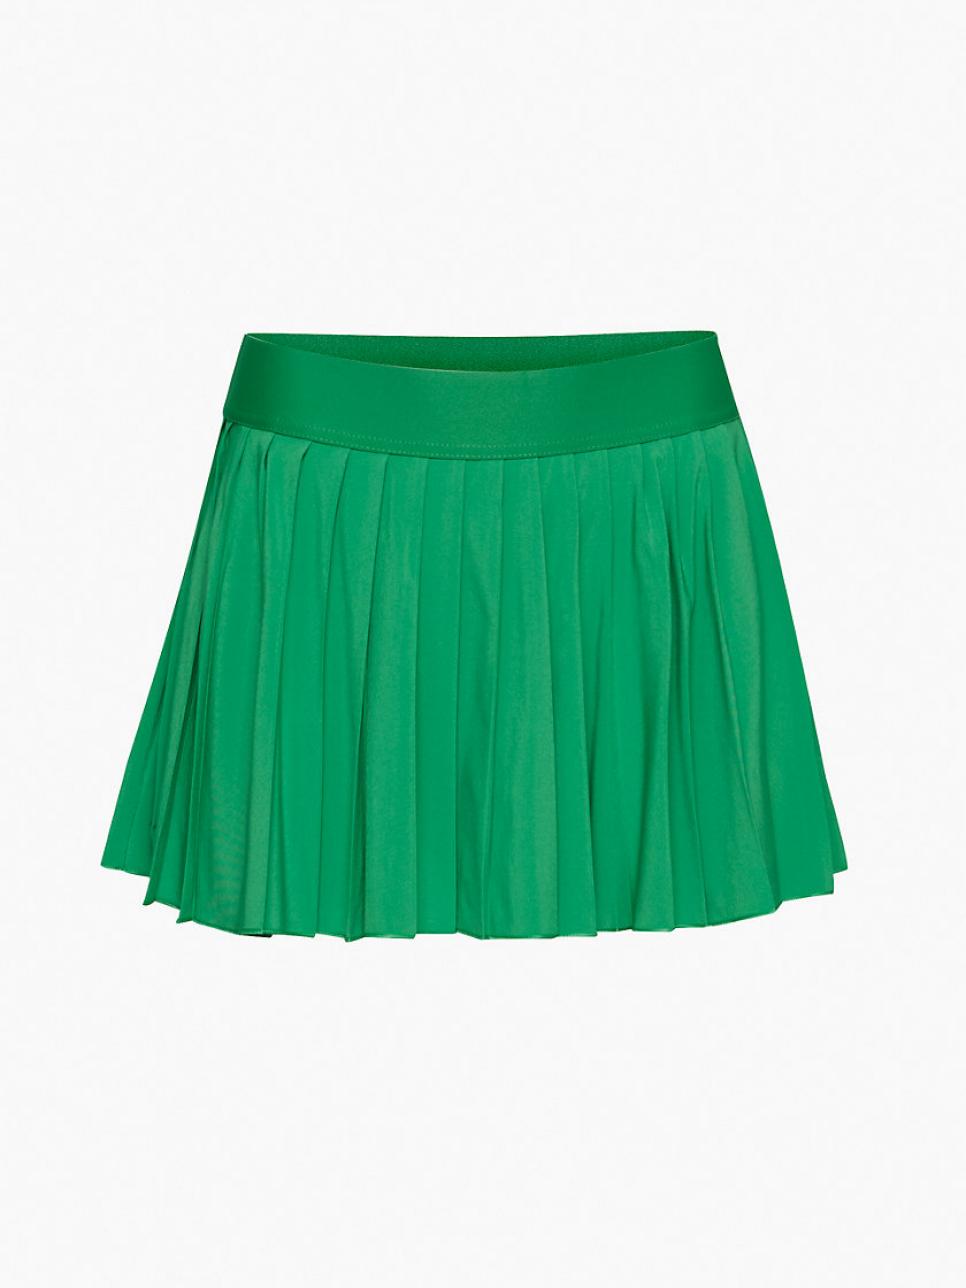 rx-aritziaartizia-tennis-micro-skirt-.jpeg